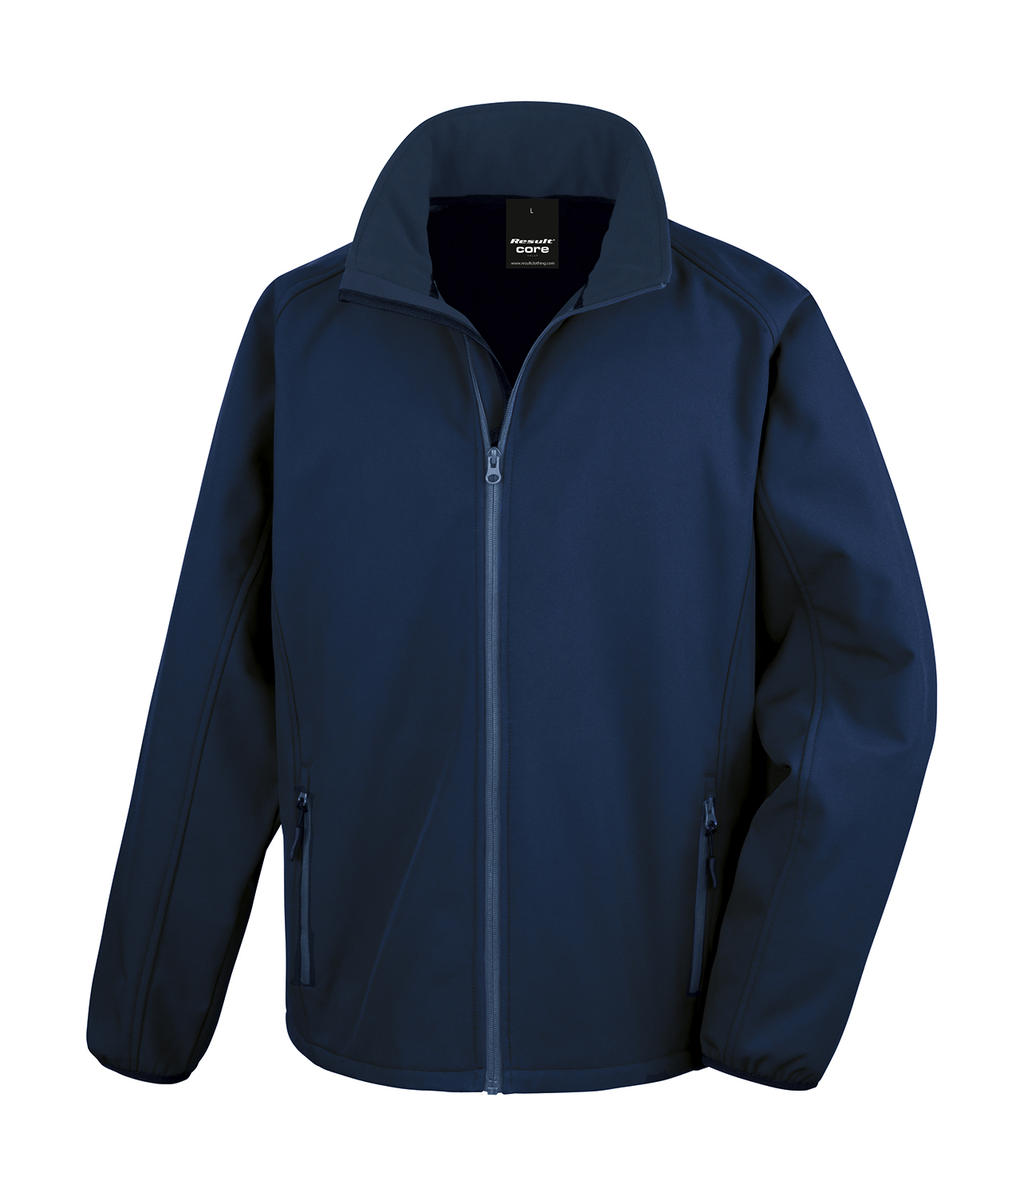  Printable Softshell Jacket in Farbe Navy/Navy